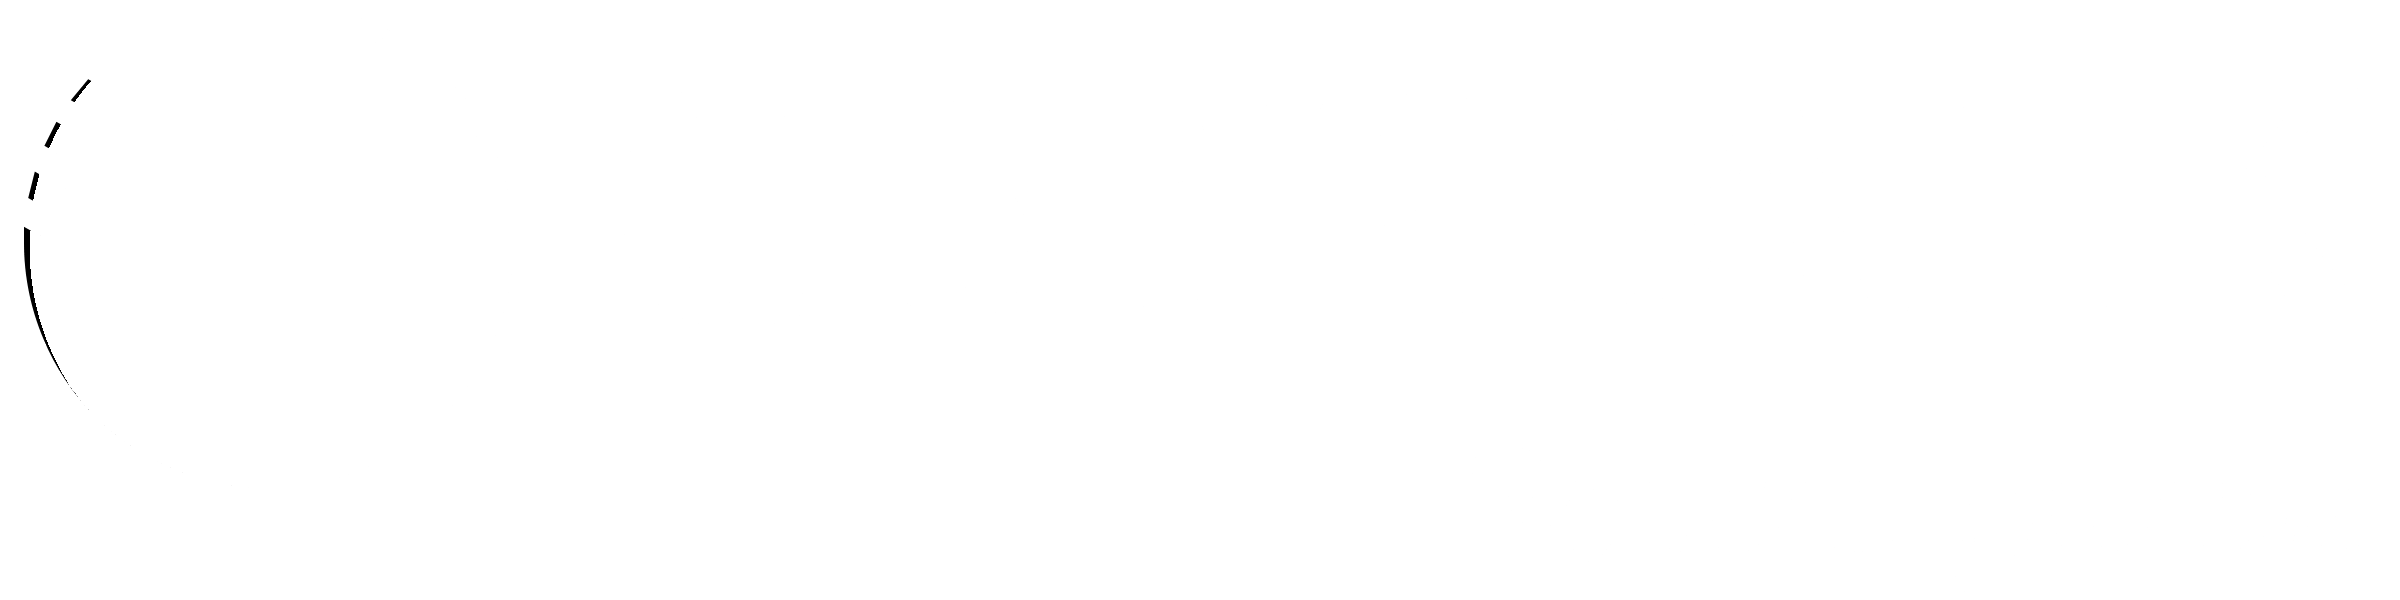 Sberbank Logo - Sberbank Logo PNG Transparent & SVG Vector - Freebie Supply